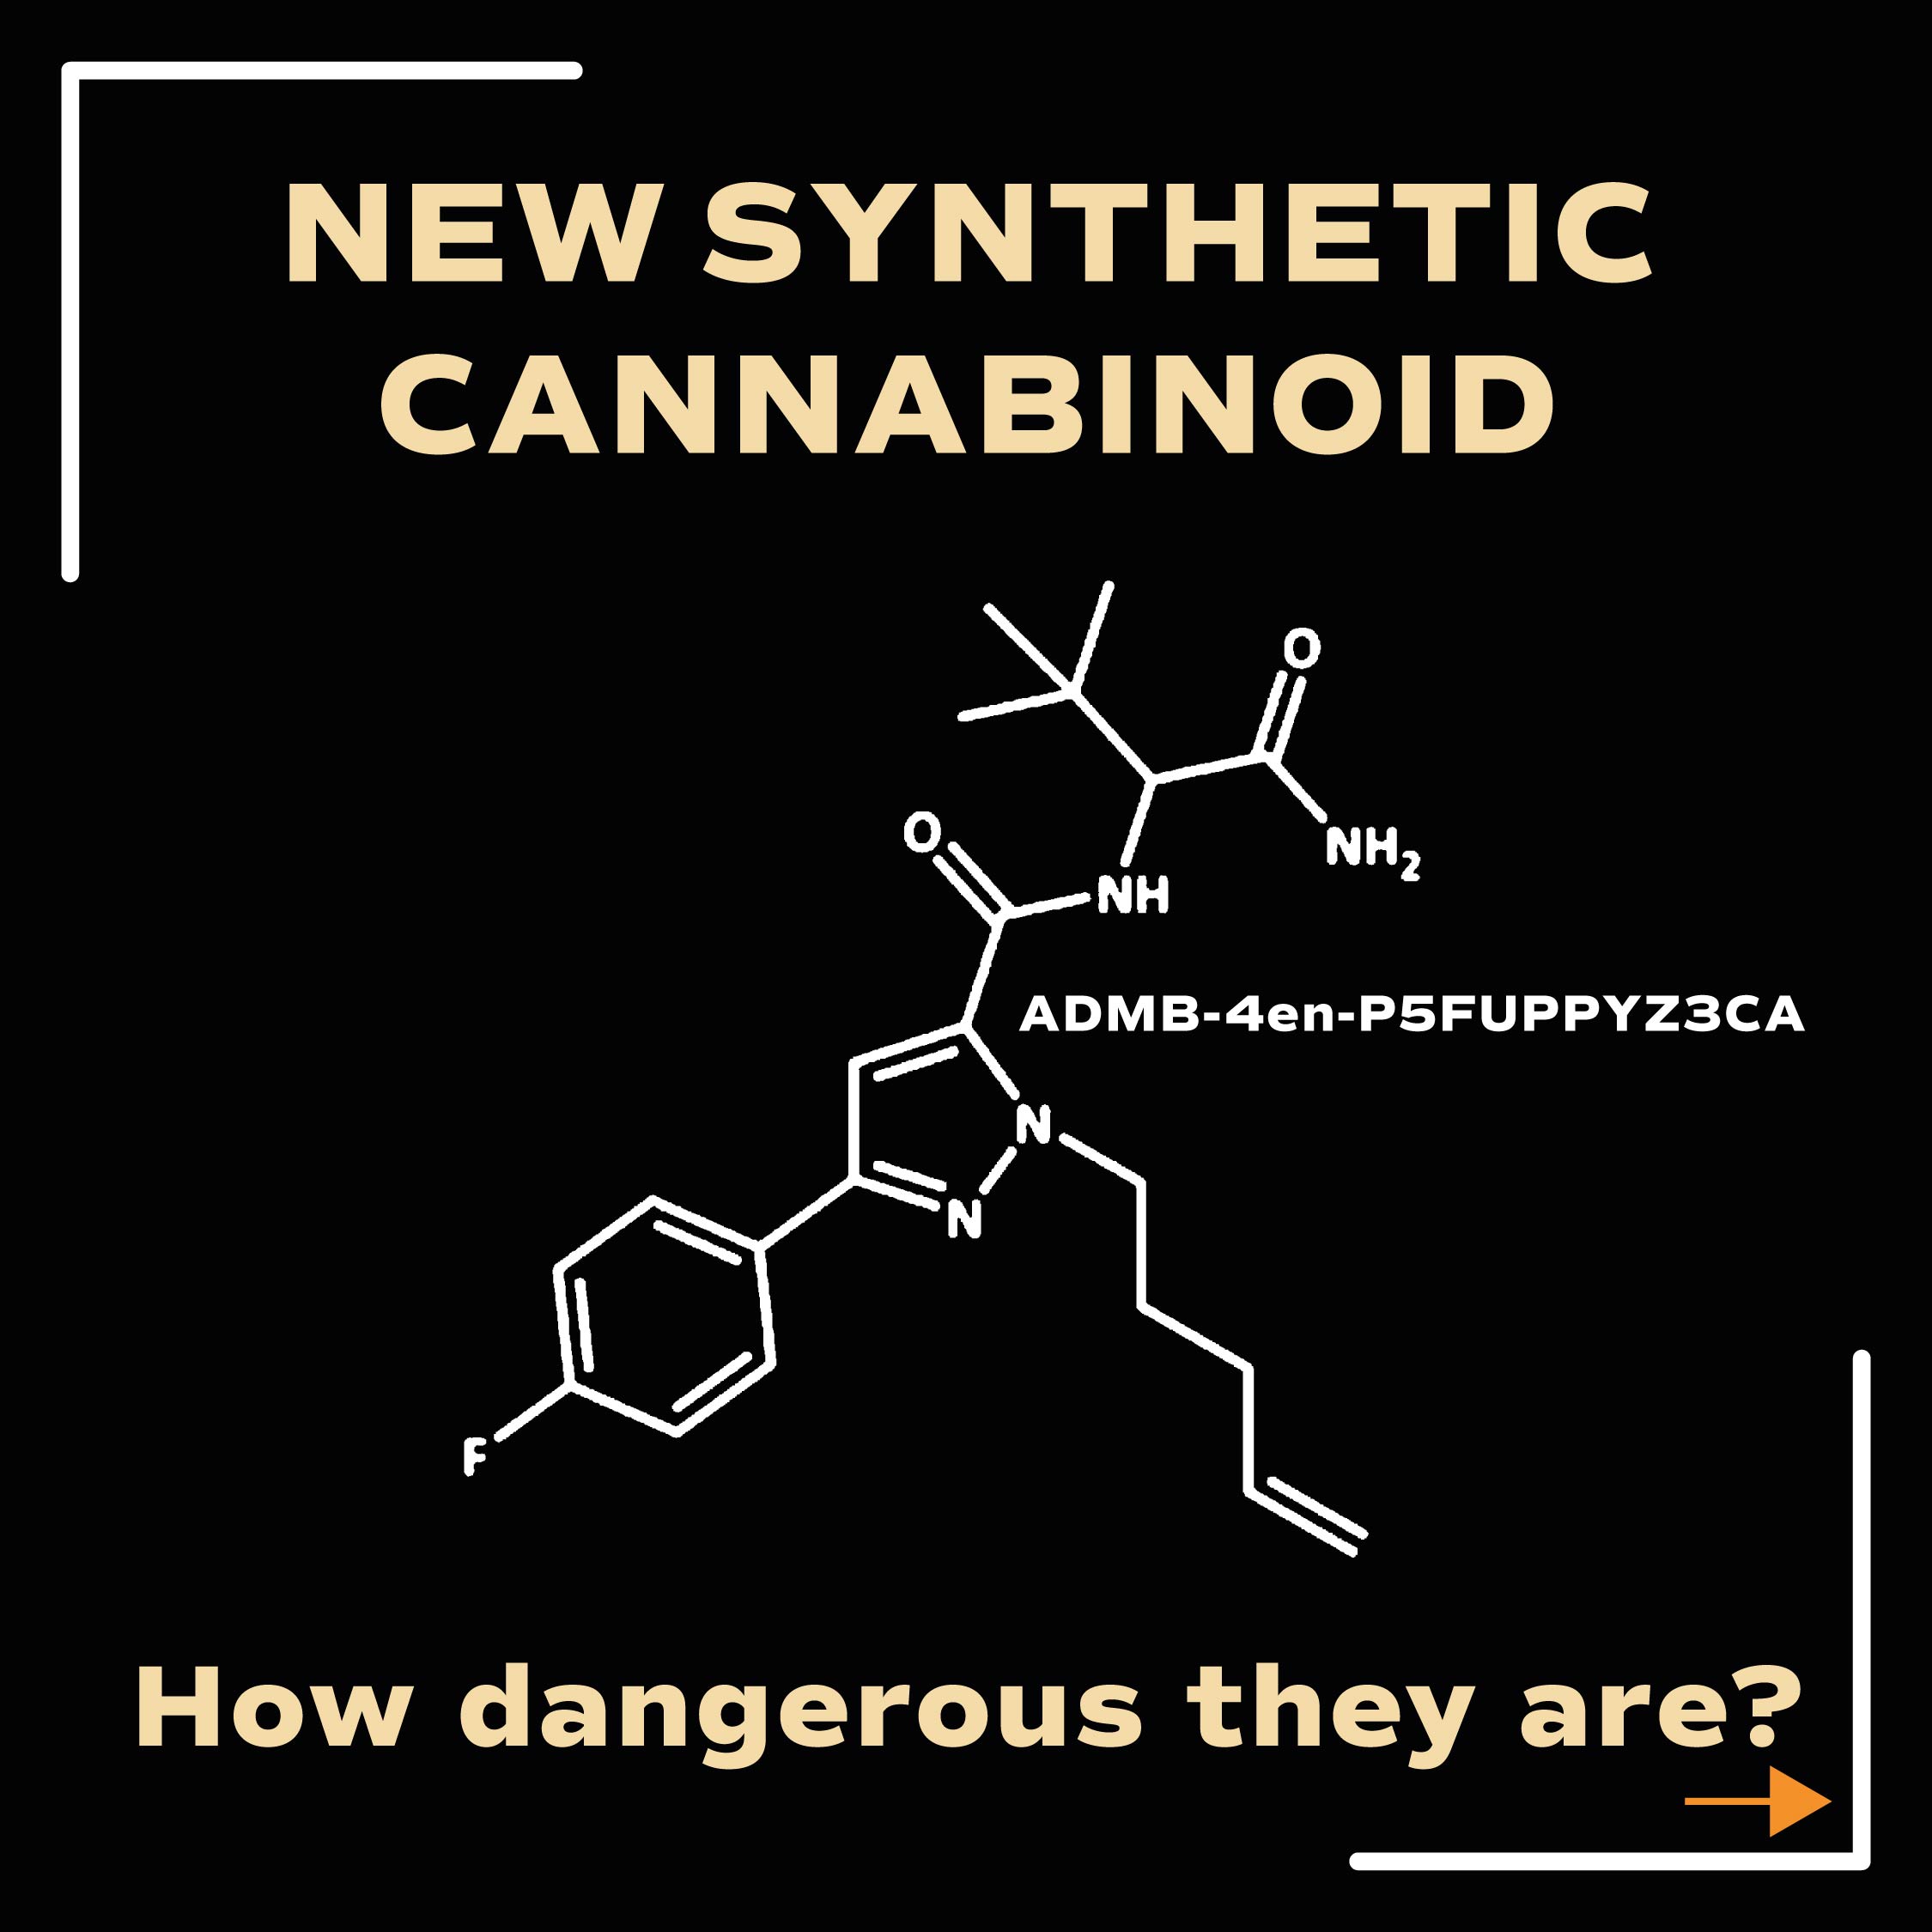 New synthetic cannabinoids